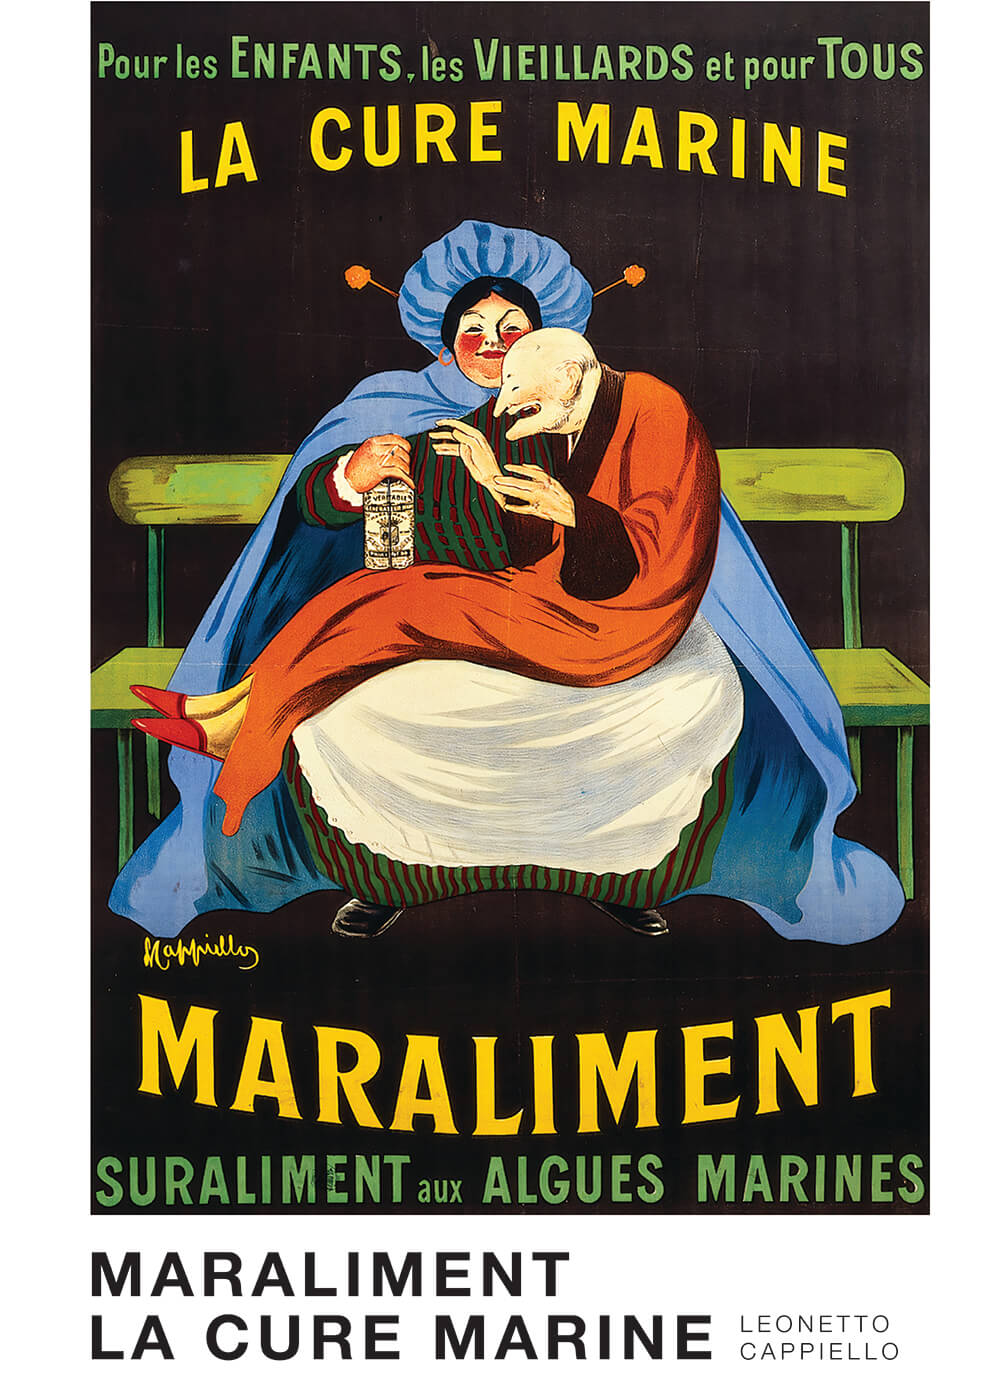 Billede af Maraliment la cure marine - Leonetto Cappiello kunstplakat